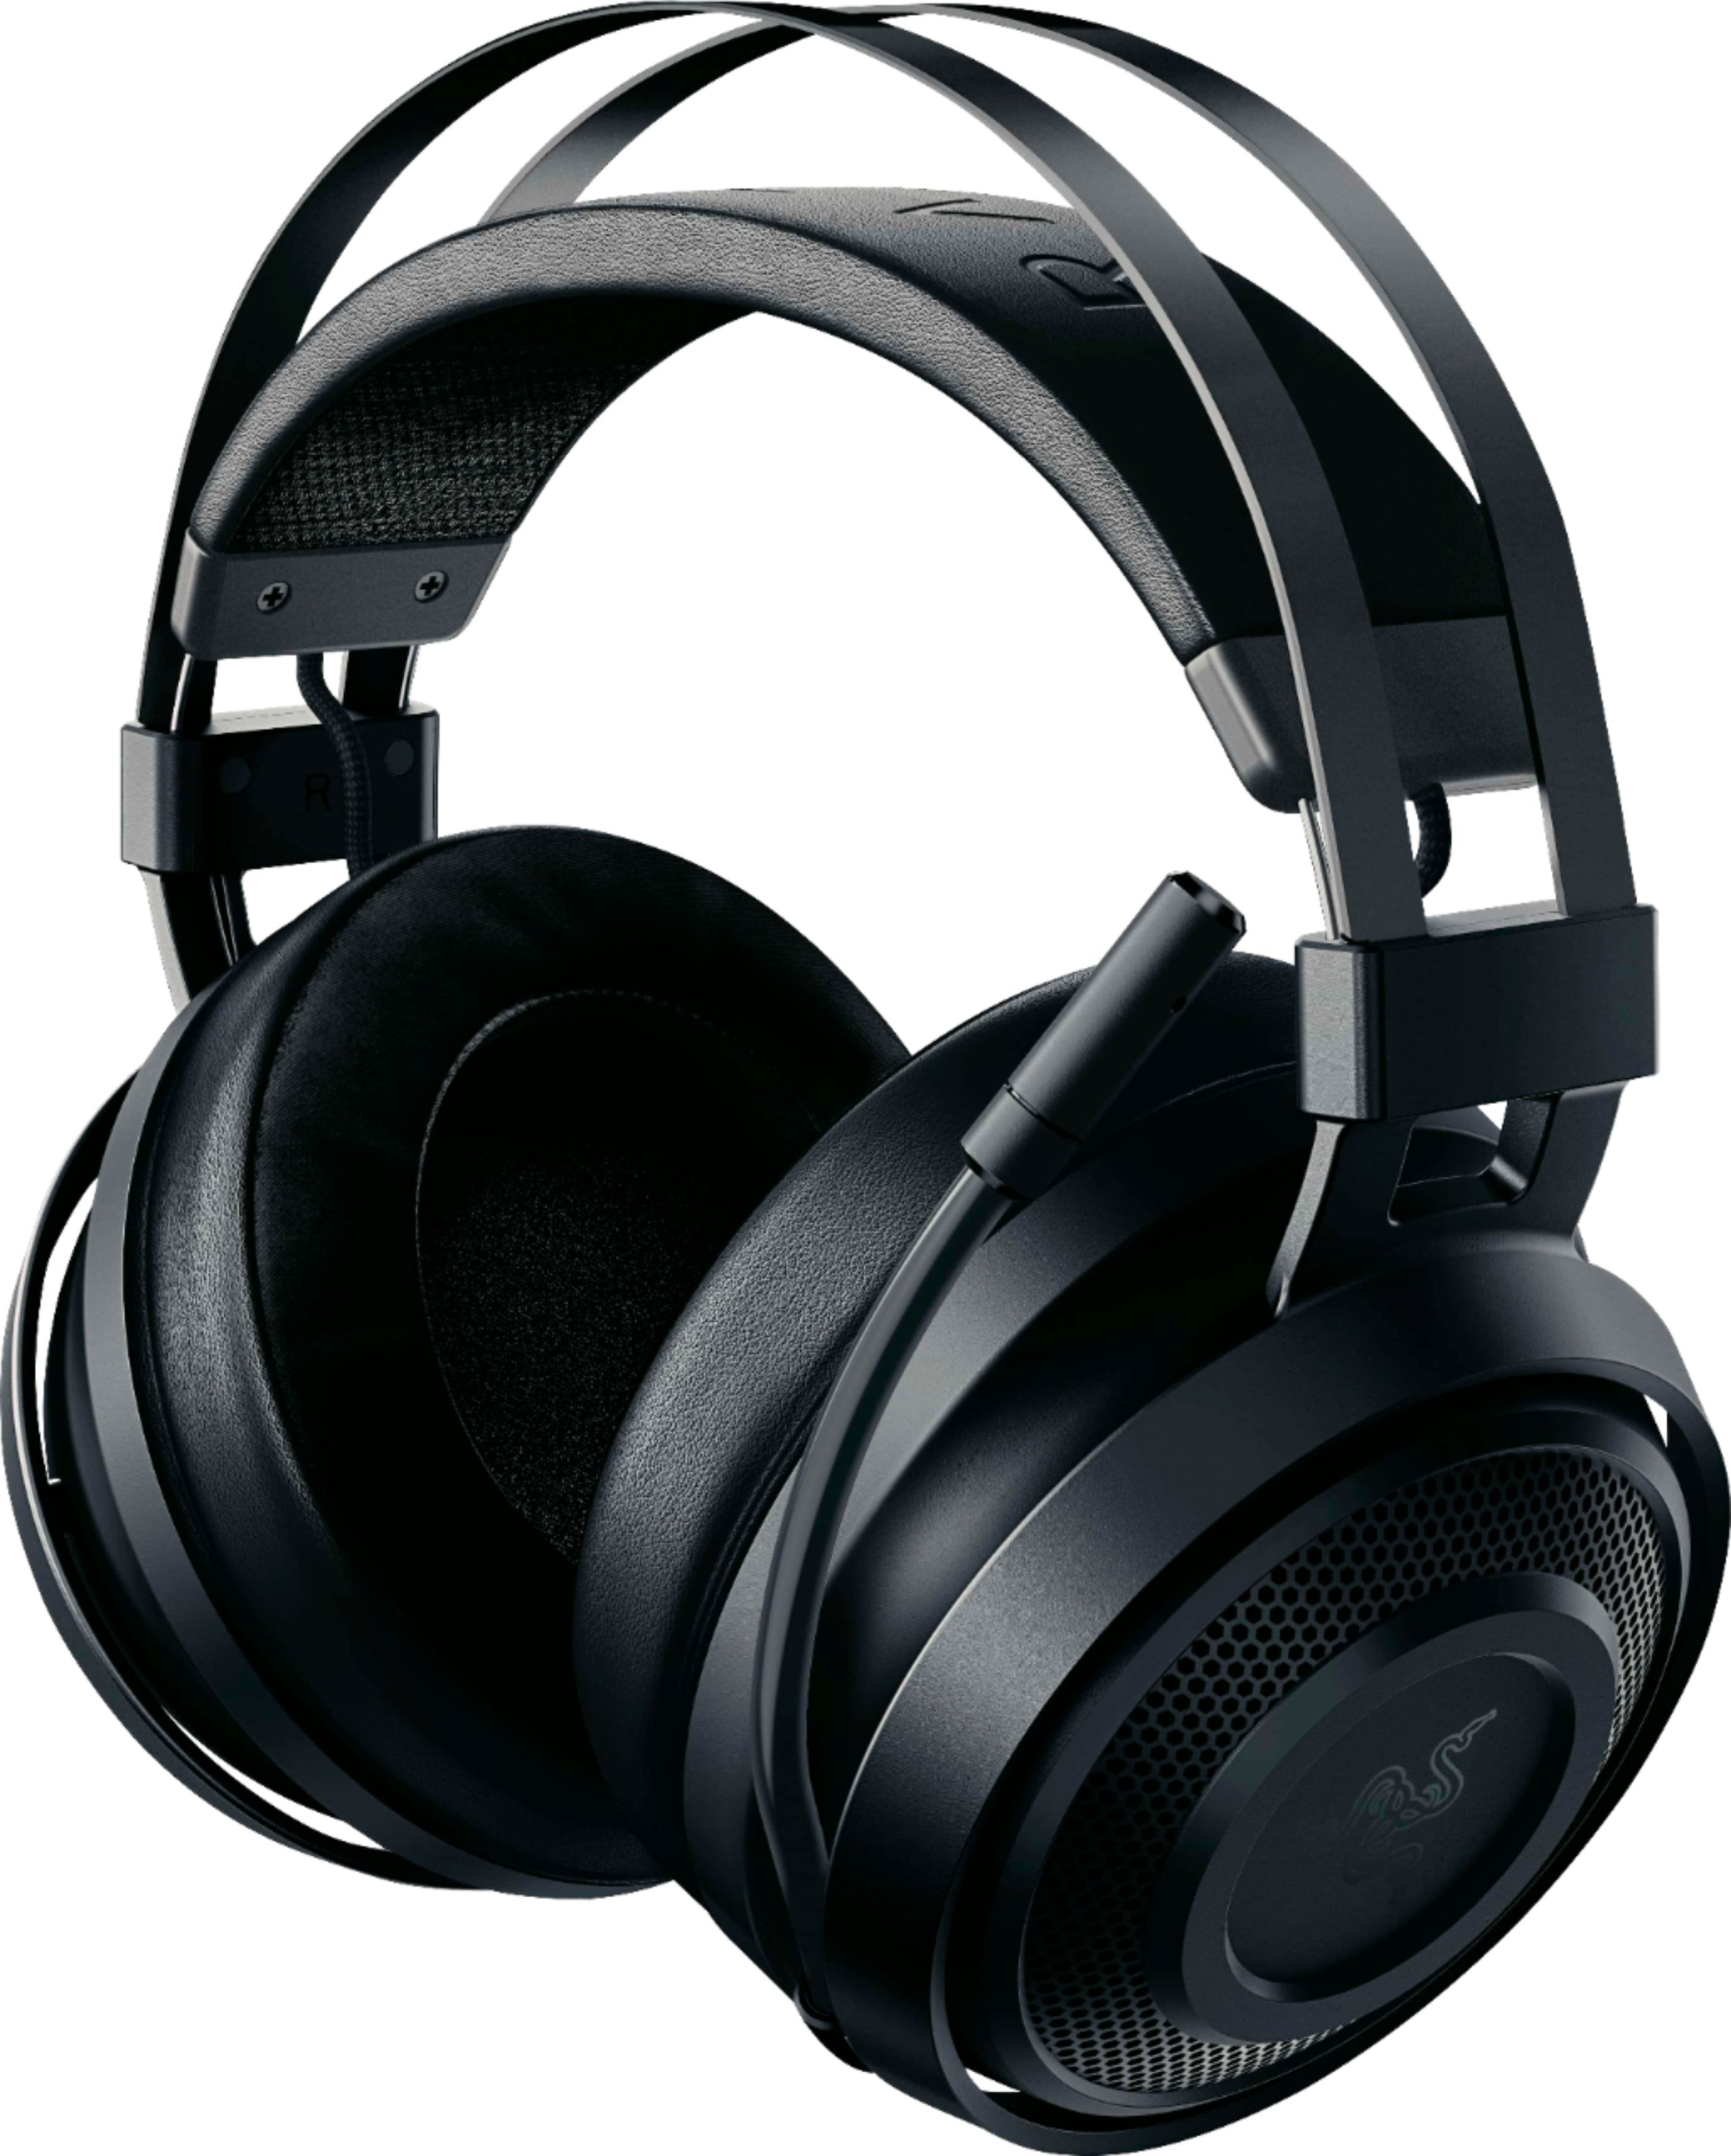 Razer Nari Essential Wireless THX Spatial Audio Gaming Headset for PC and PlayStation 4 Black RZ04-02690100-R3U1 - Best Buy $40